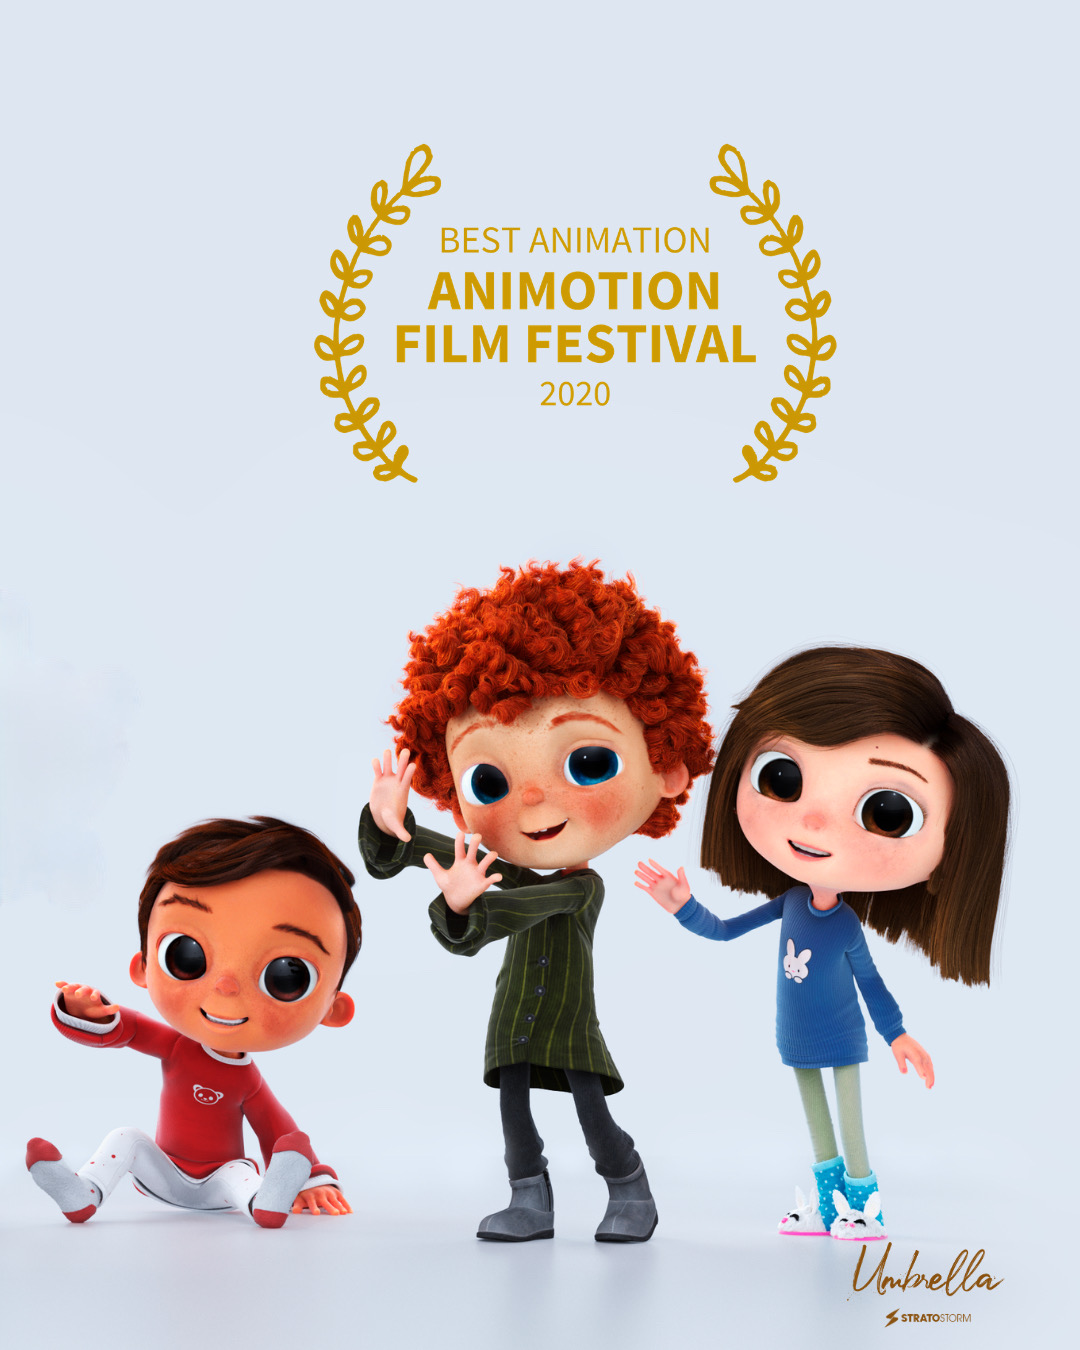 Thank you, Animation Film Festival